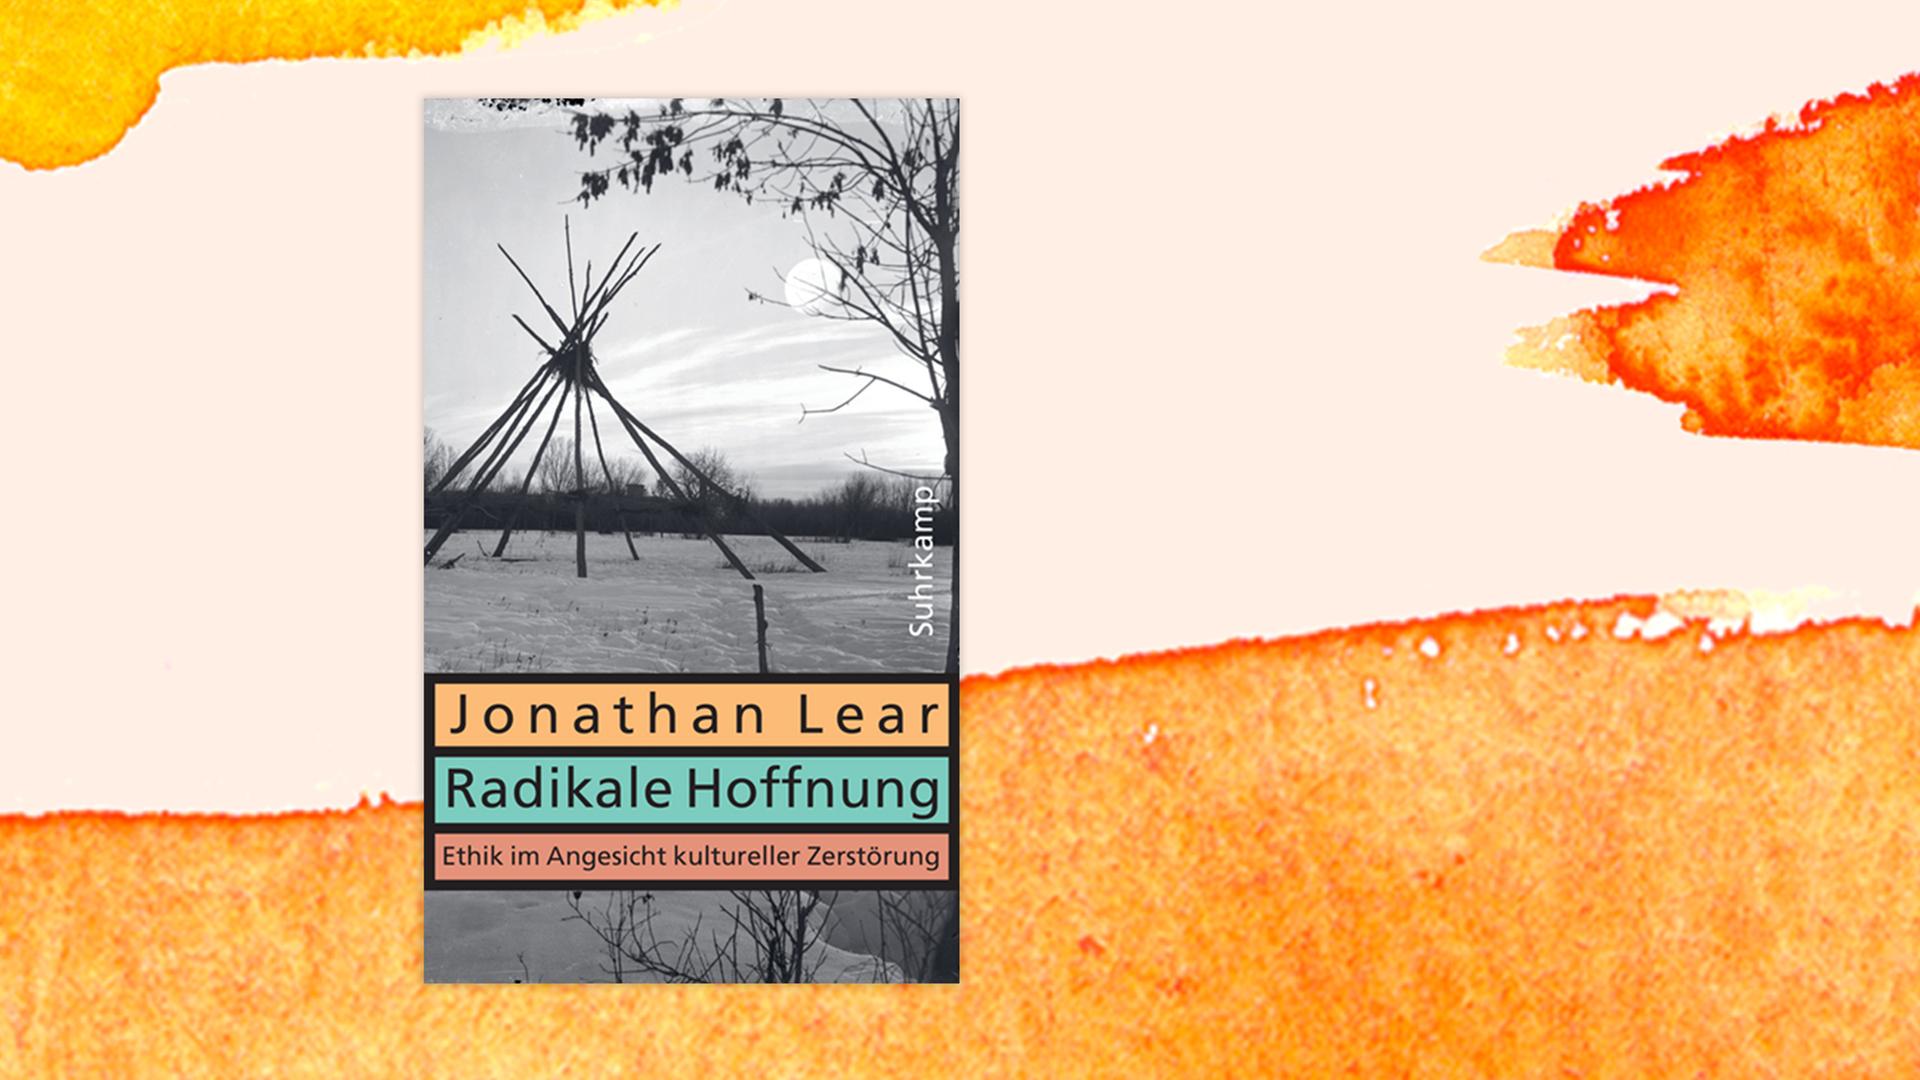 Buchcover: Jonathan Lear: "Radikale Hoffnung - Ethik im Angesicht kultureller Zerstörung"